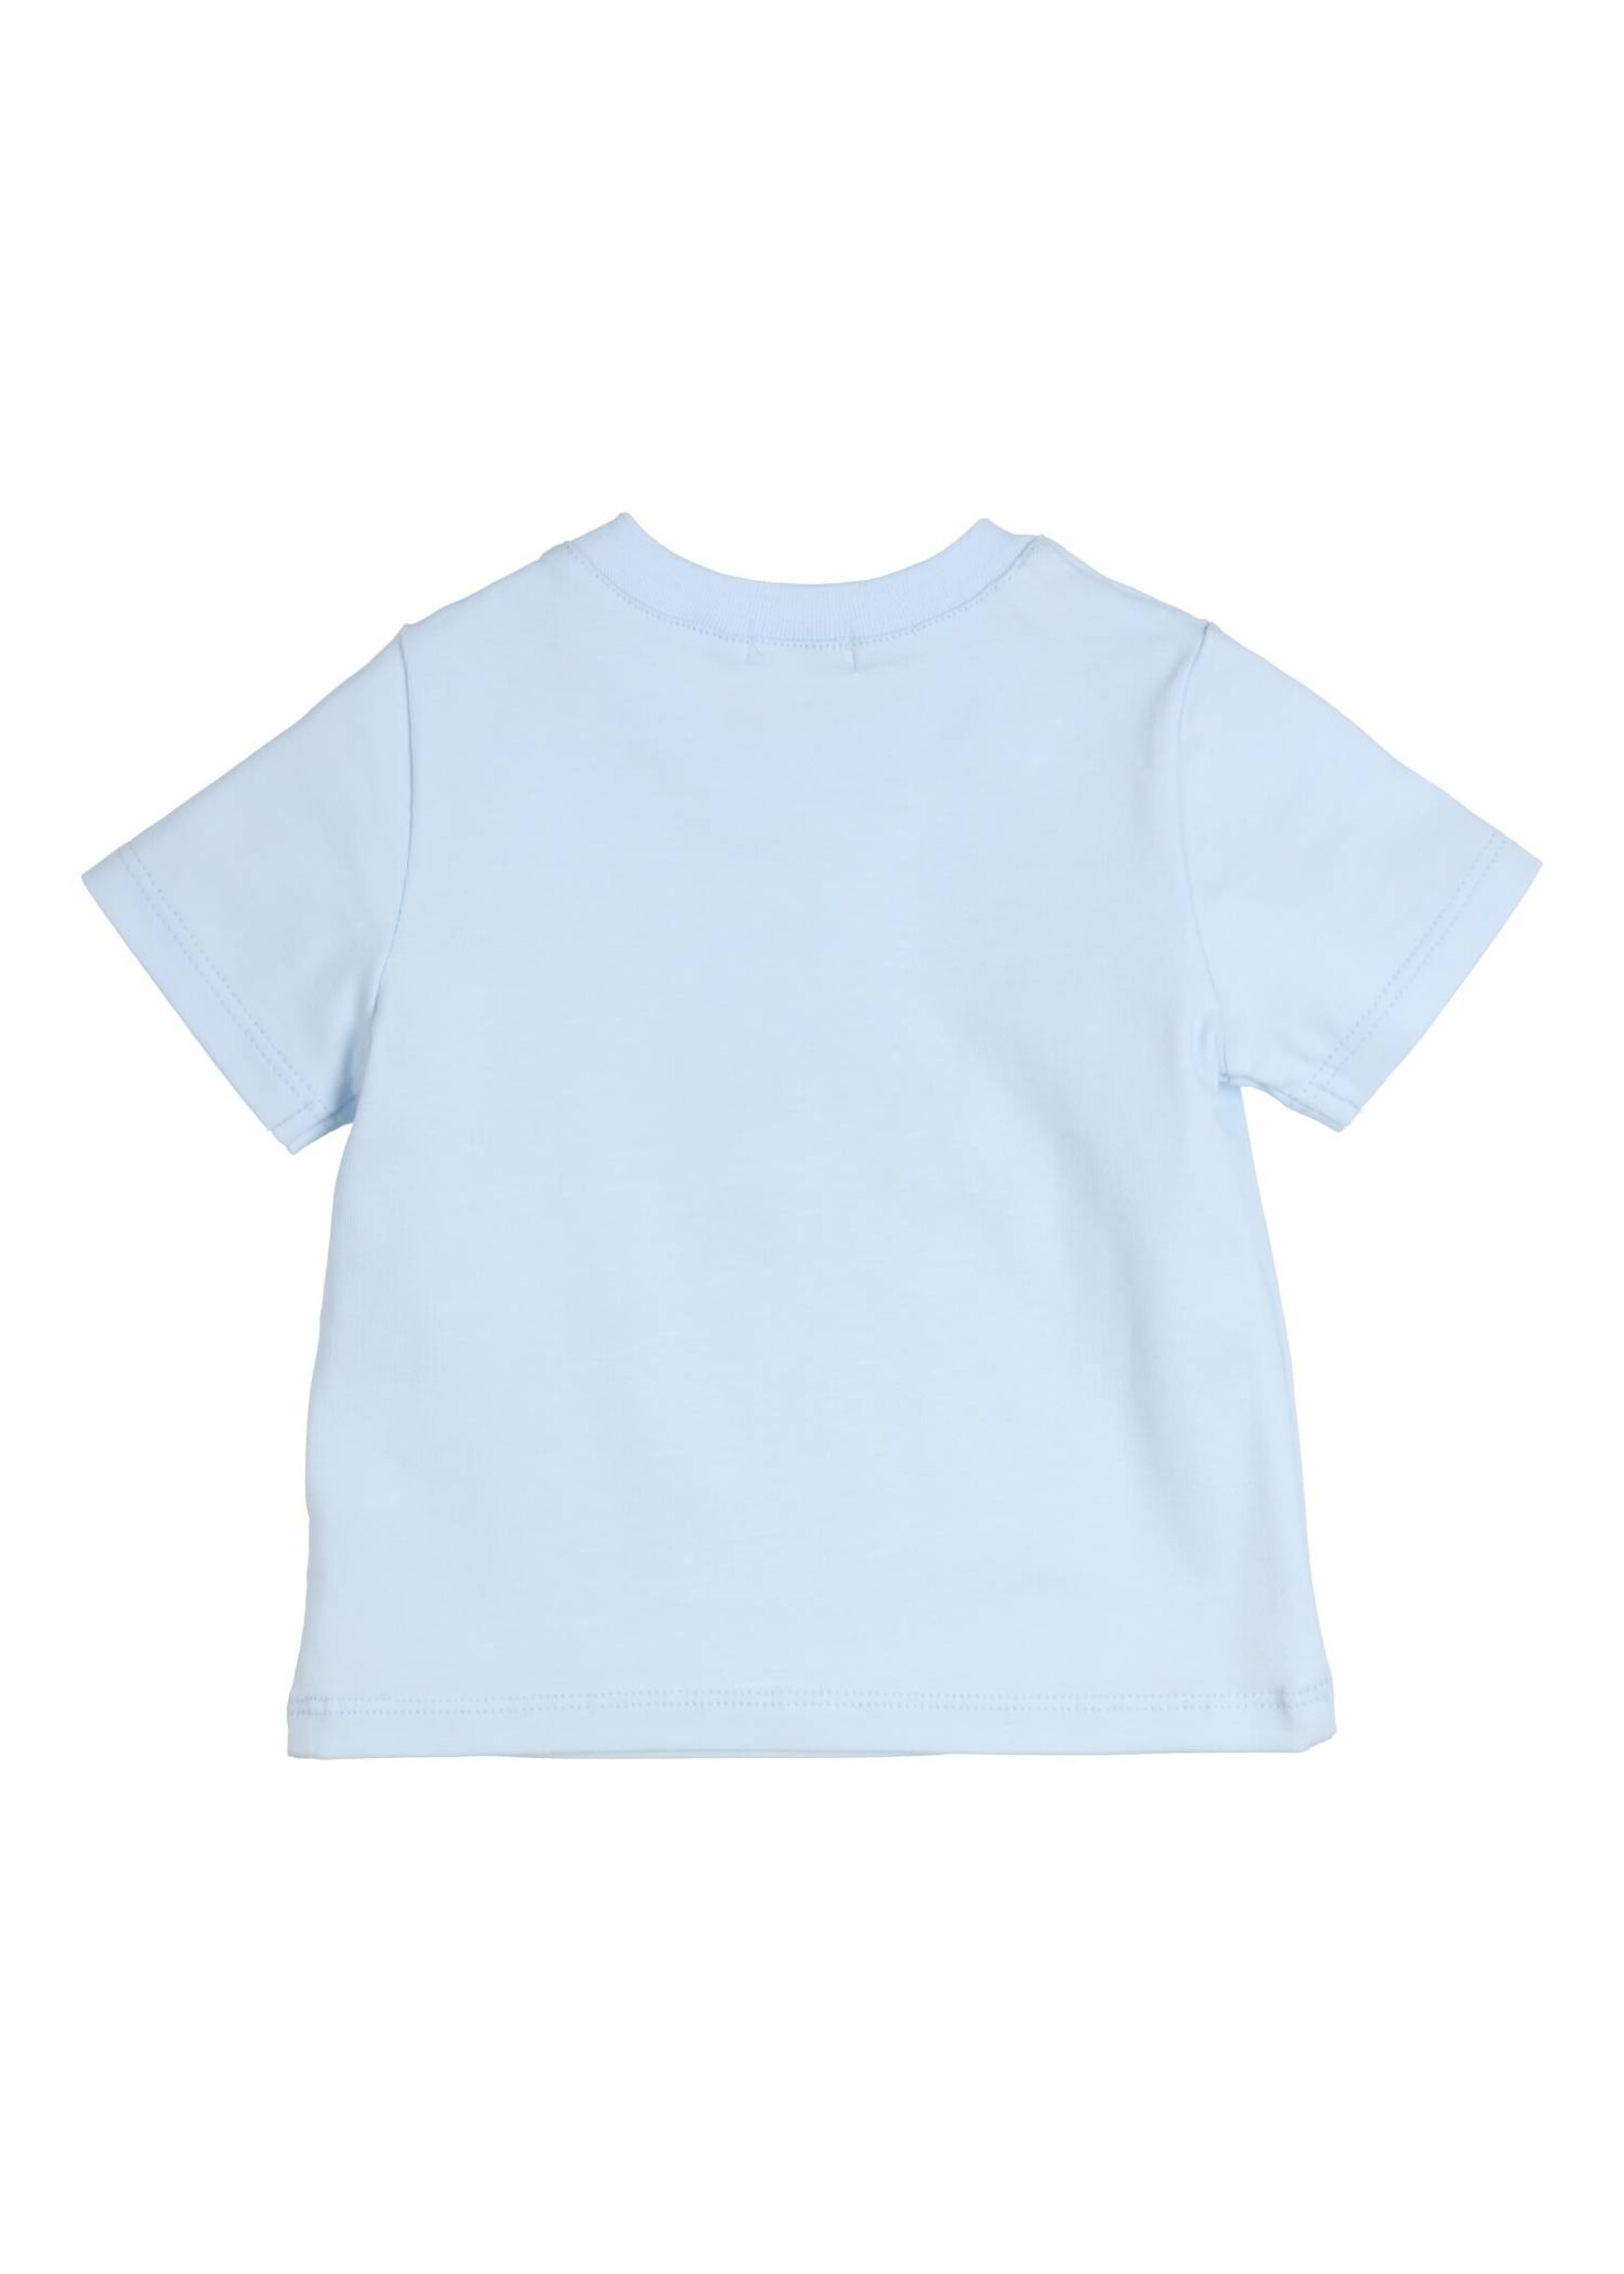 Gymp Boys T-shirt Aerobic Sea you later 353-4434-20 Light Blue